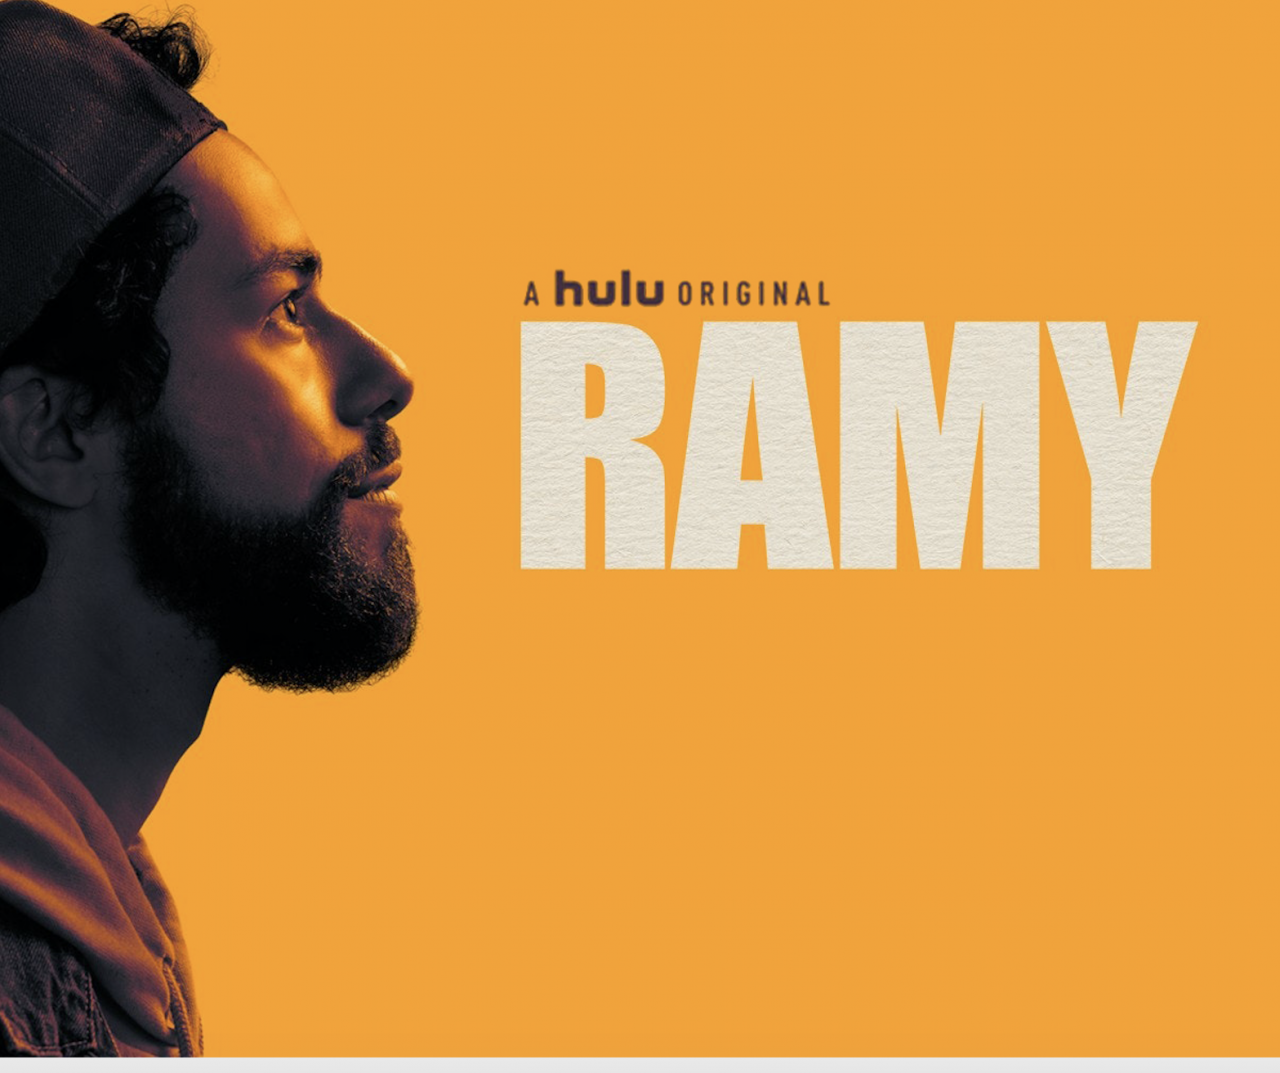 Watch Ramy | Season 2